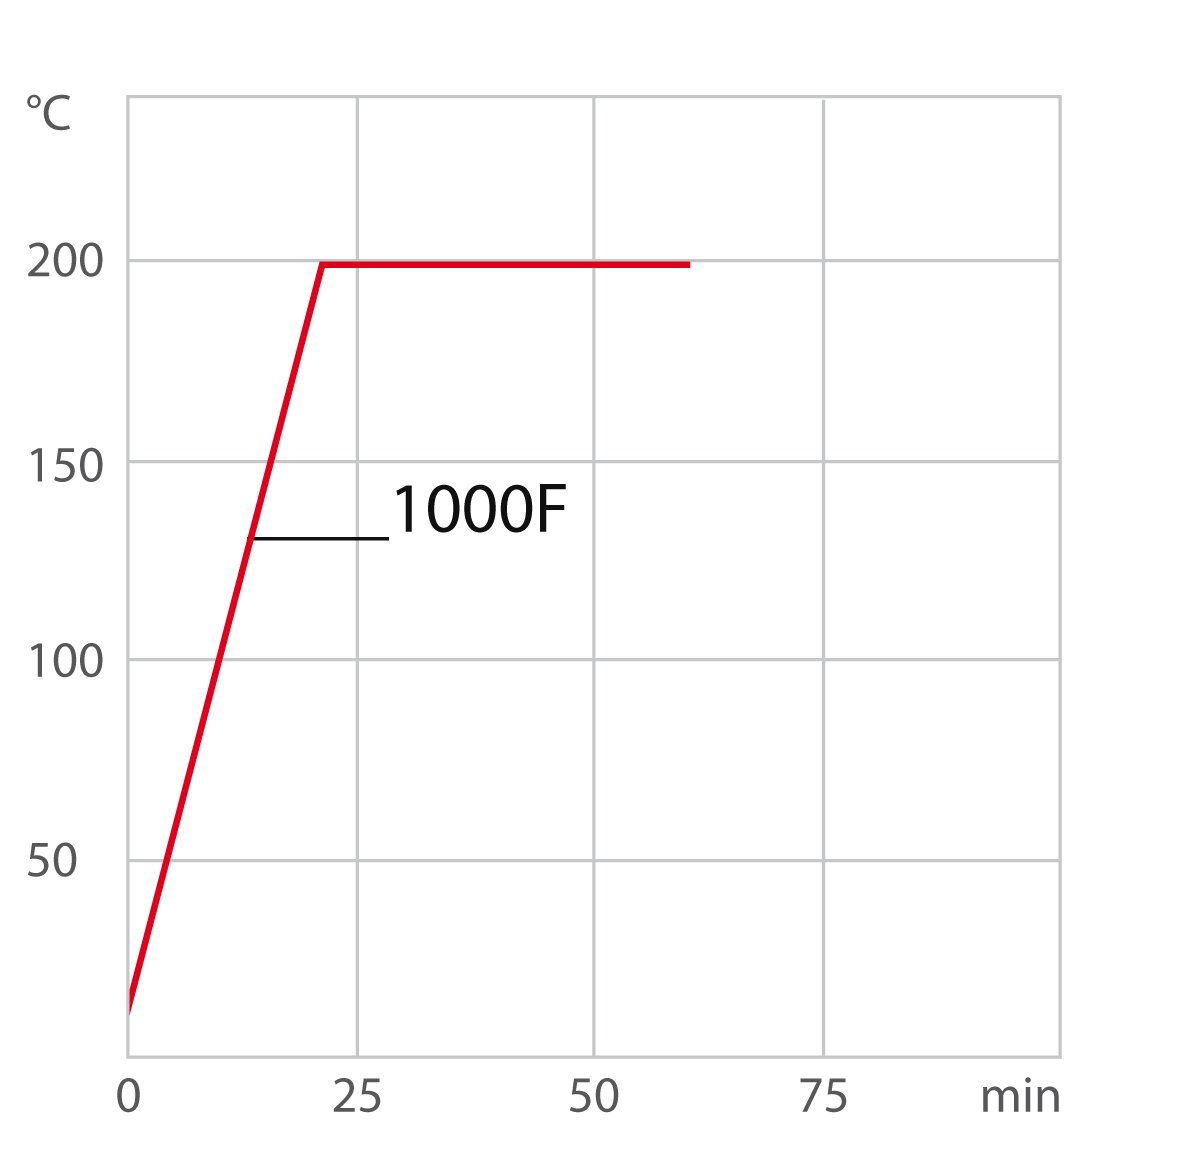 Heating curve 1000F